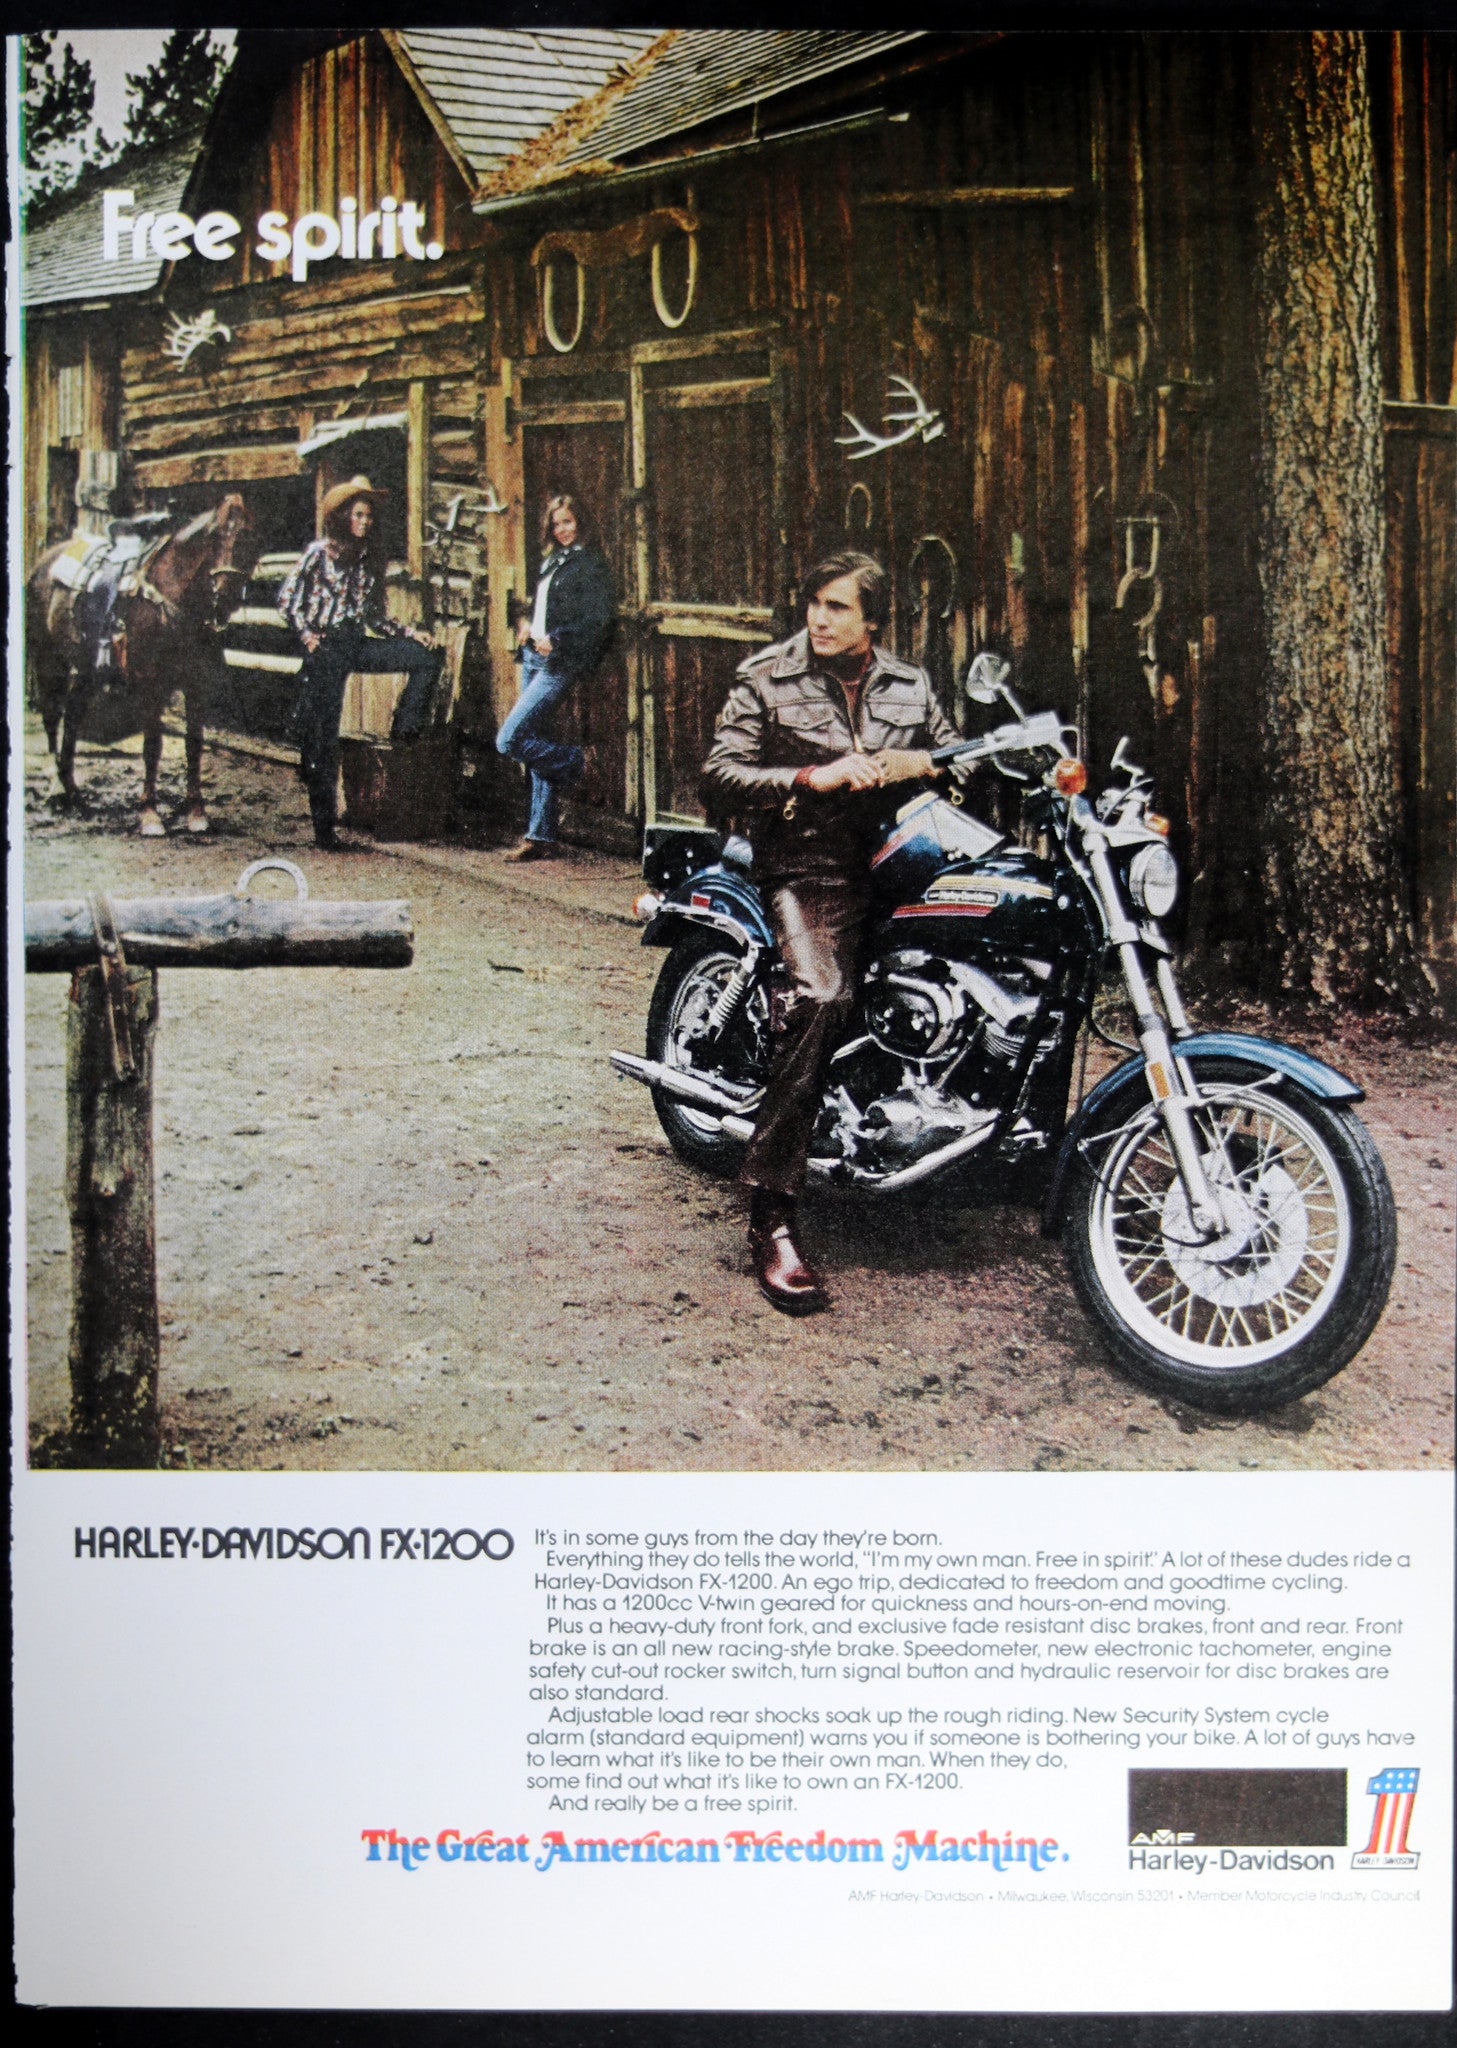 1974 Harley-Davidson FX-1200 magazine advertisement